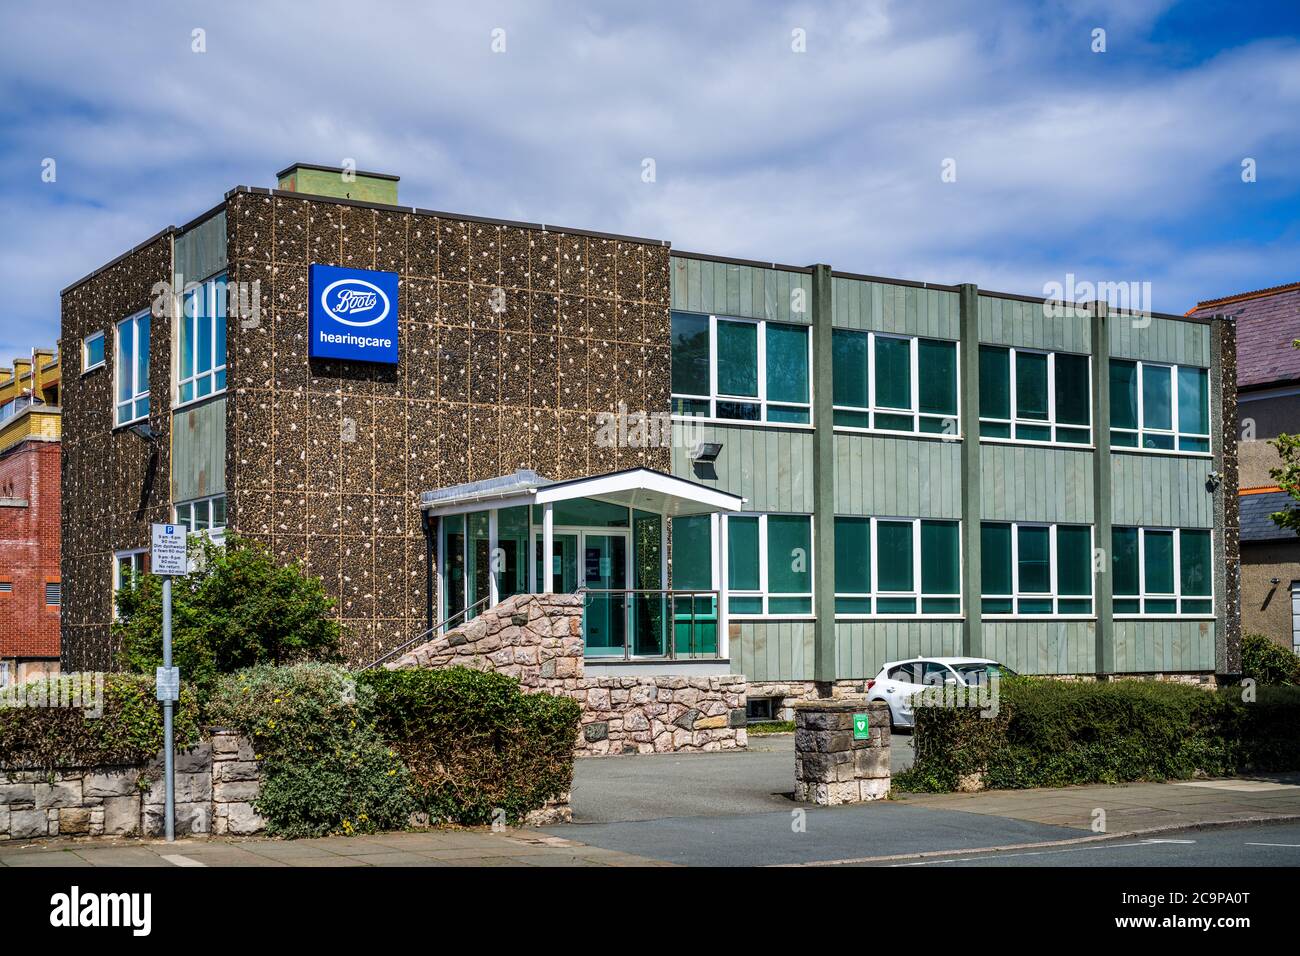 Boots Hearingcare Hauptsitz in Llandudno, Nordwales. Boots übernahm 2013 die David Omerod Hörzentren. Stockfoto